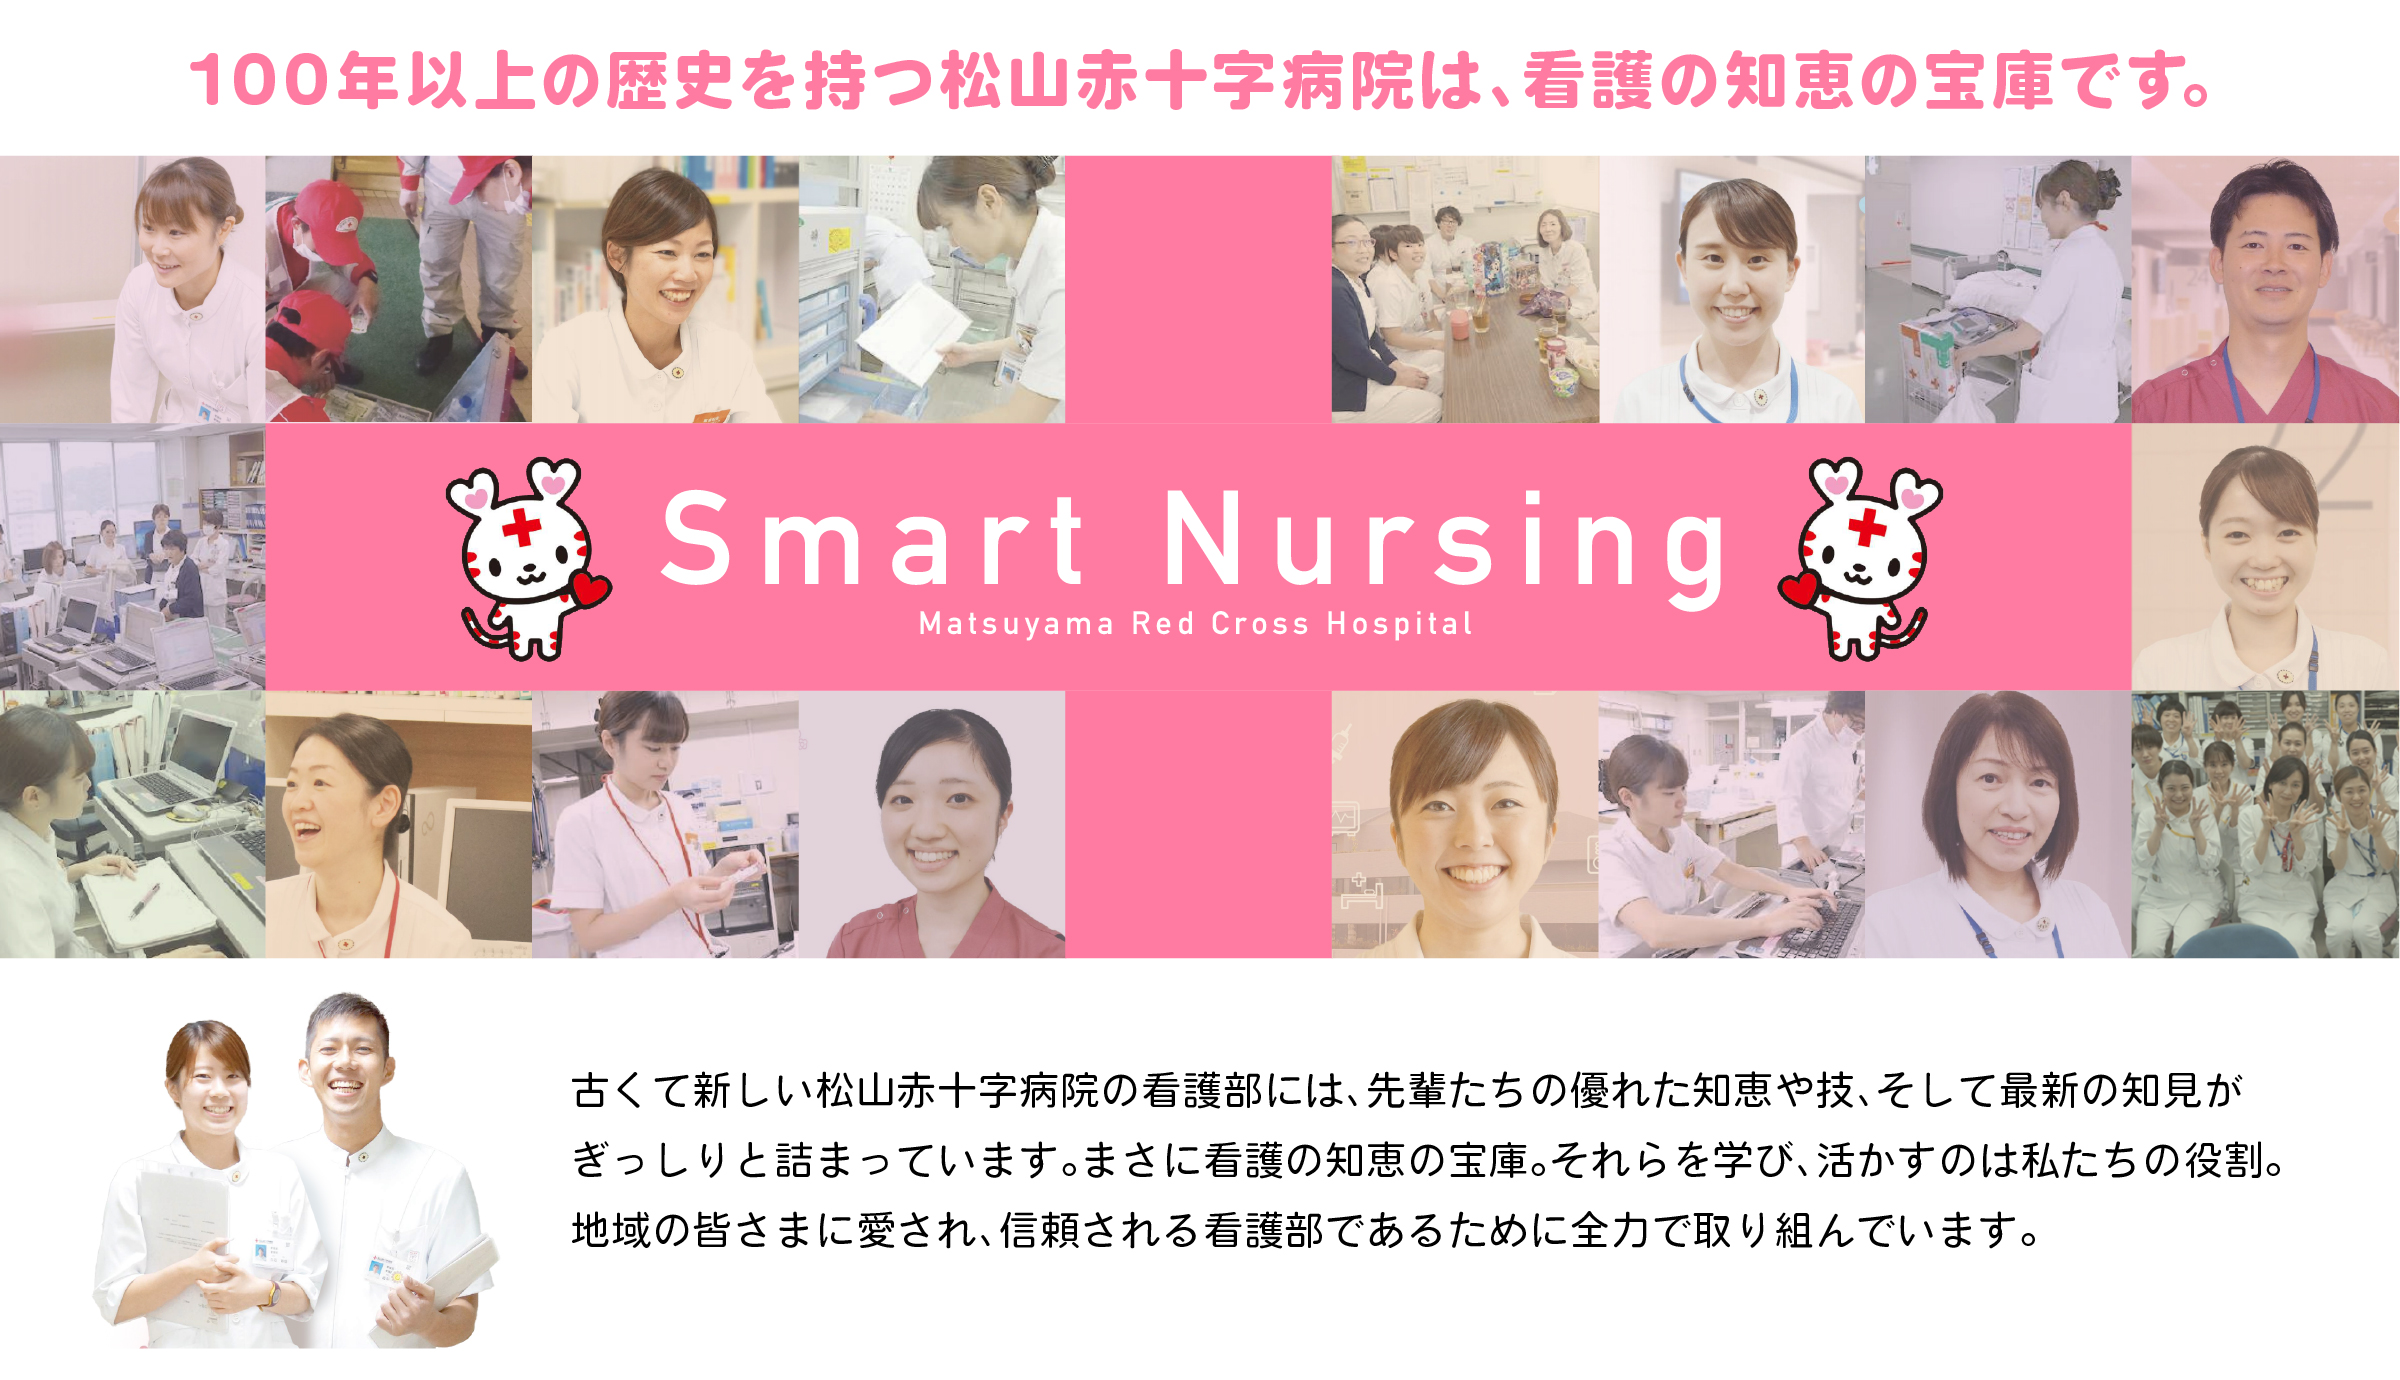 Smart Nursing